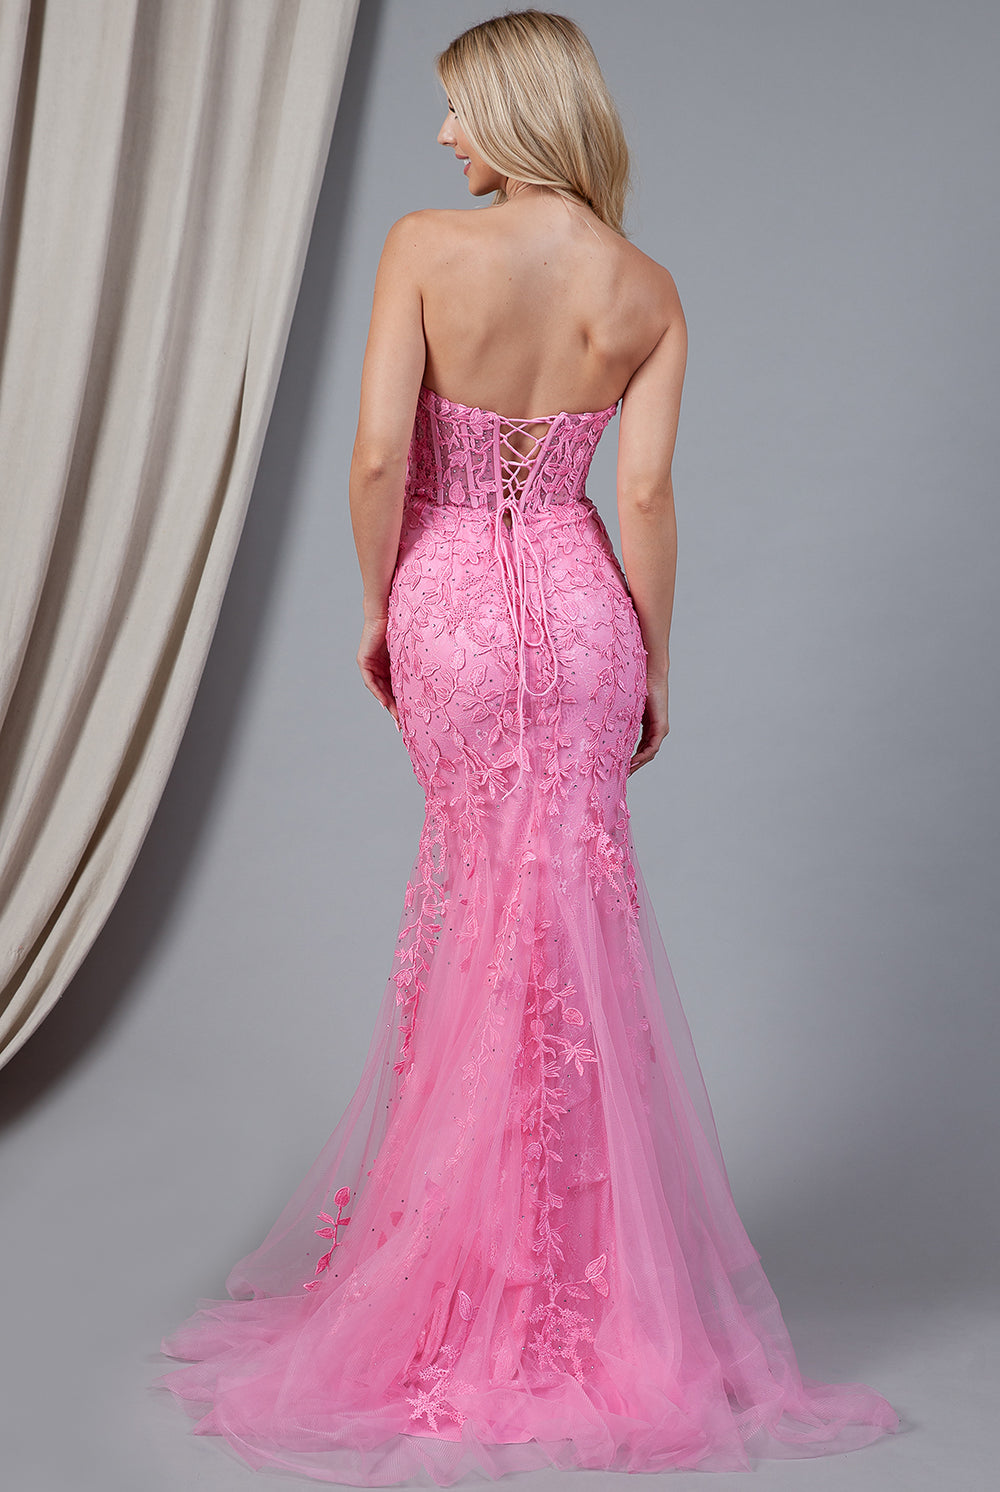 Mermaid Strapless Embroidered Lace Long Prom Dress AC7024-Prom Dress-smcfashion.com